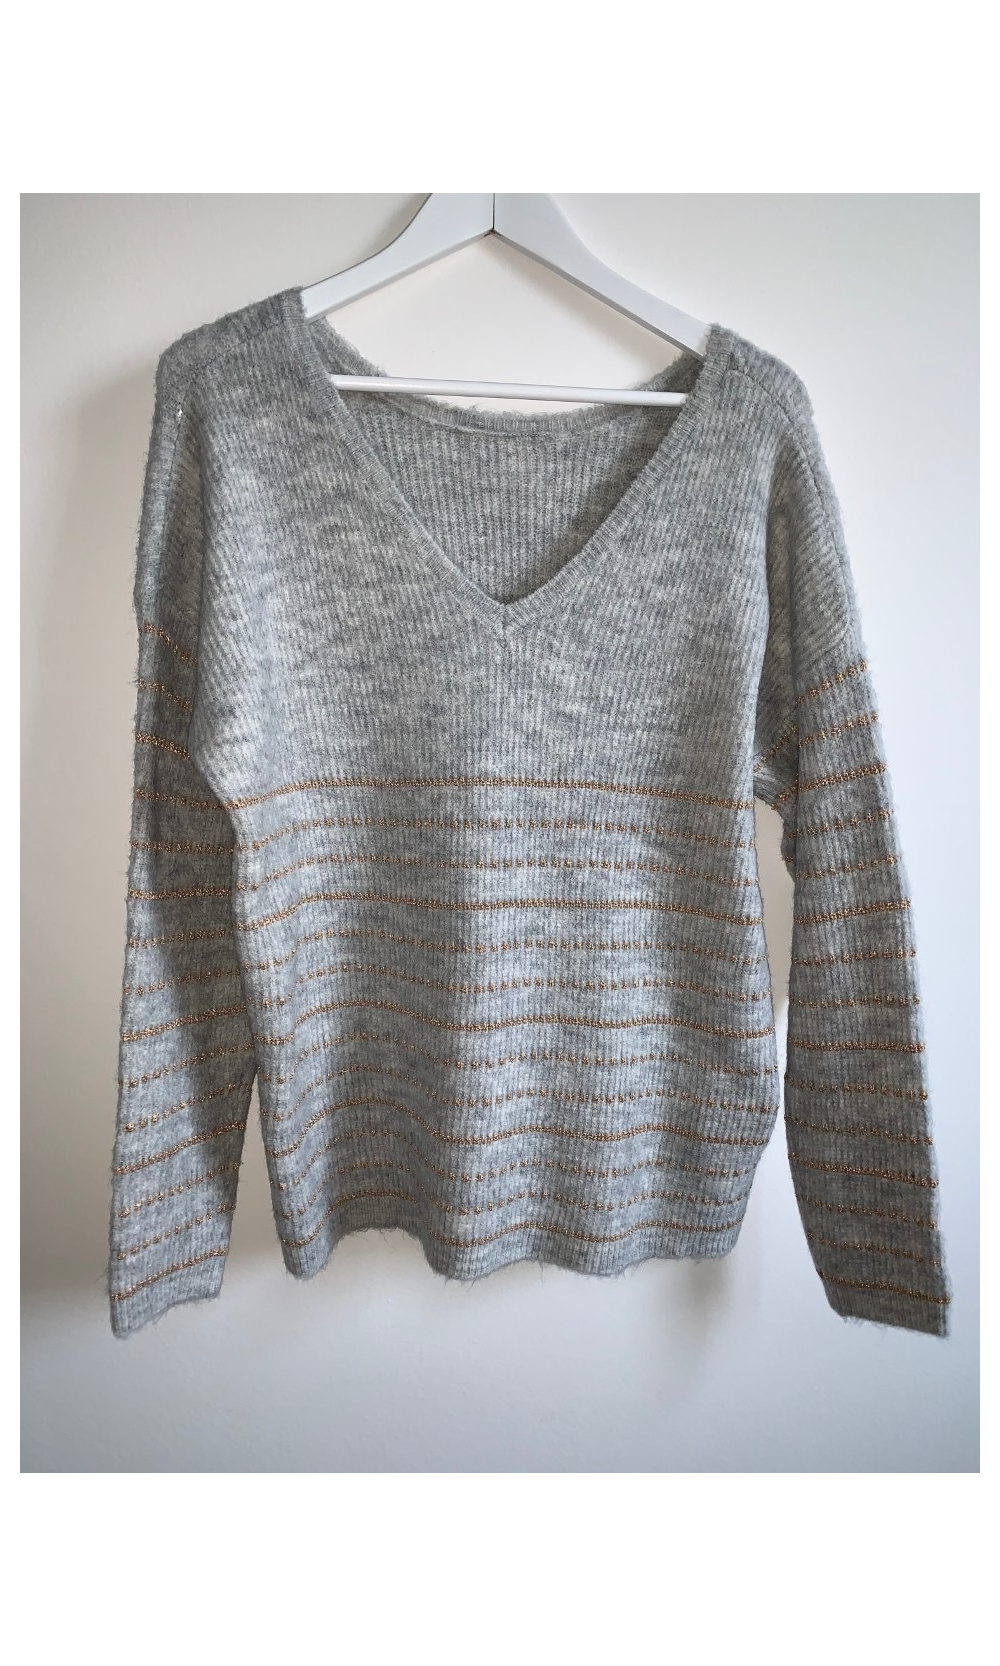 Gray v-neck sweater